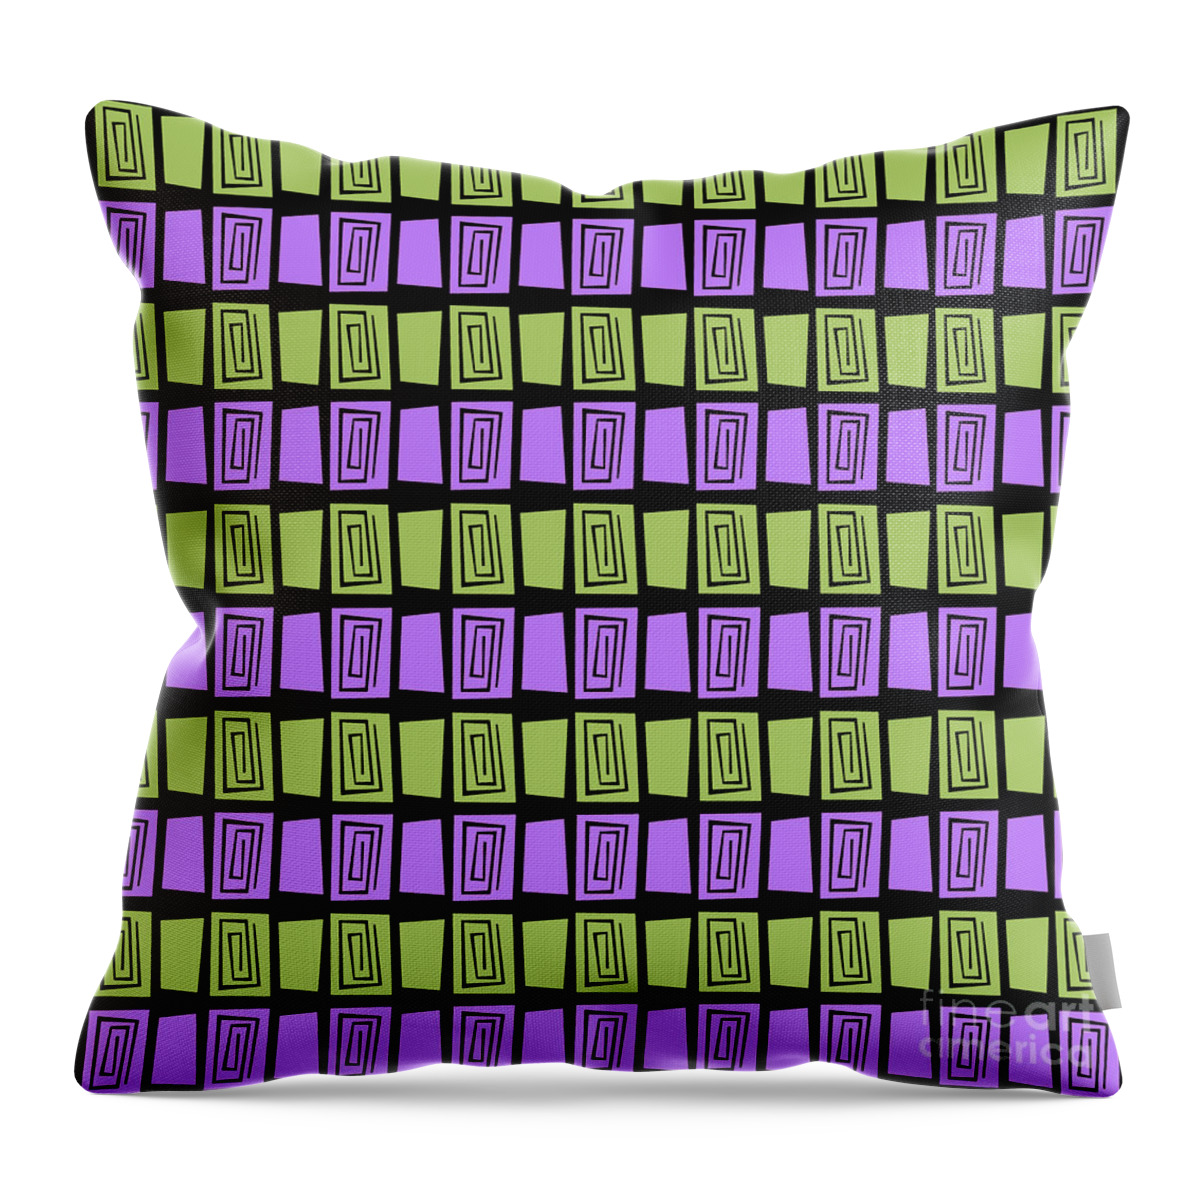 Mid Century Modern Throw Pillow featuring the digital art Mid Century Modern Maze #2 by Donna Mibus